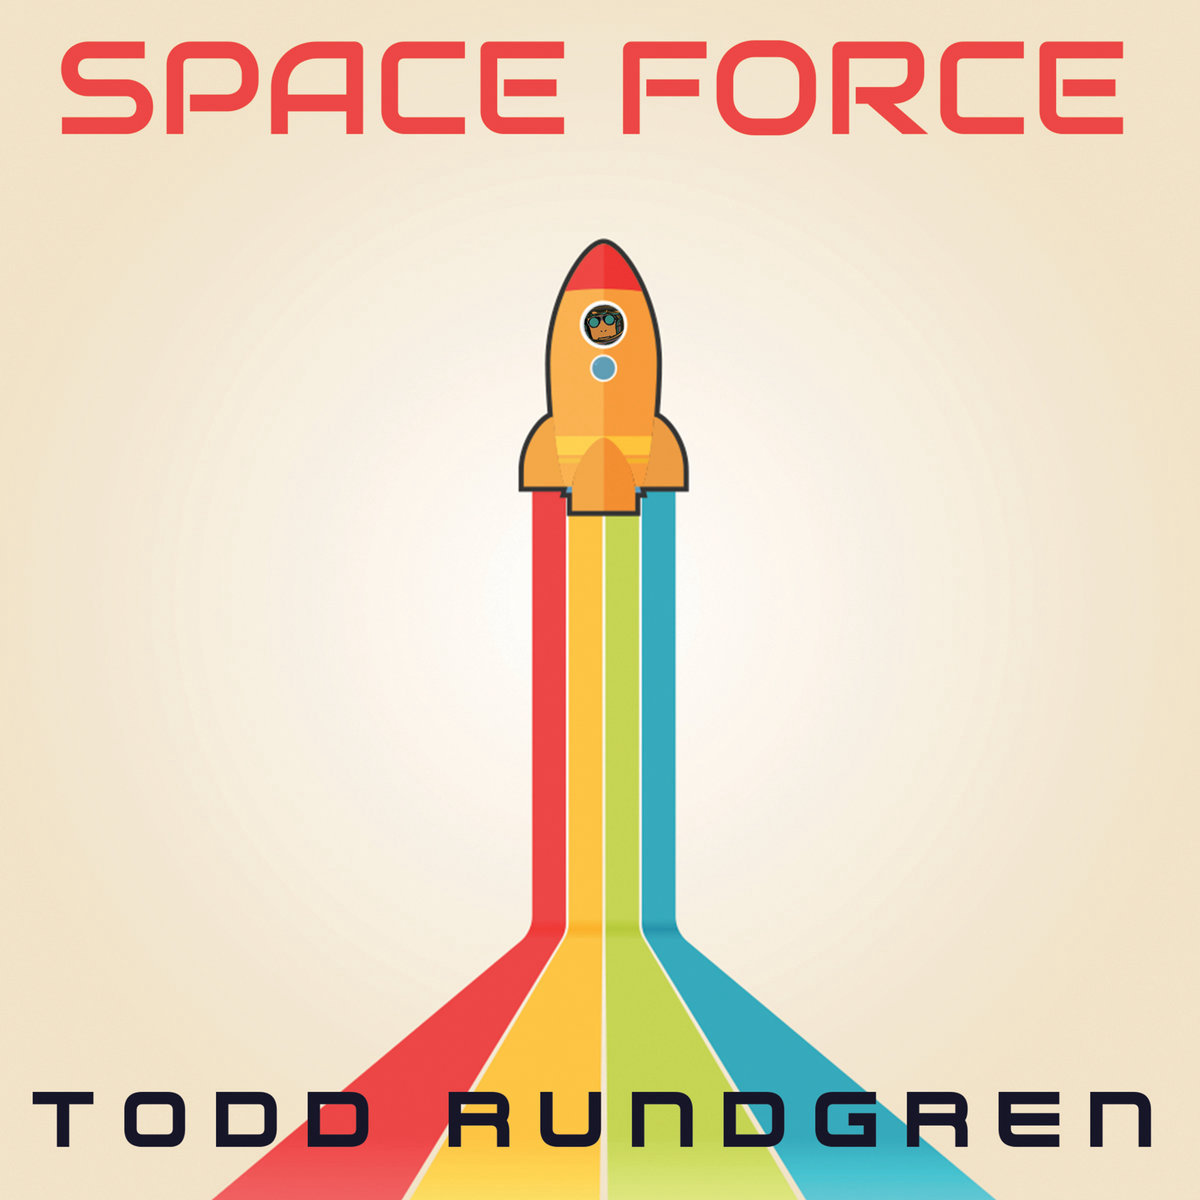 Todd Rundgren Space Force cover artwork